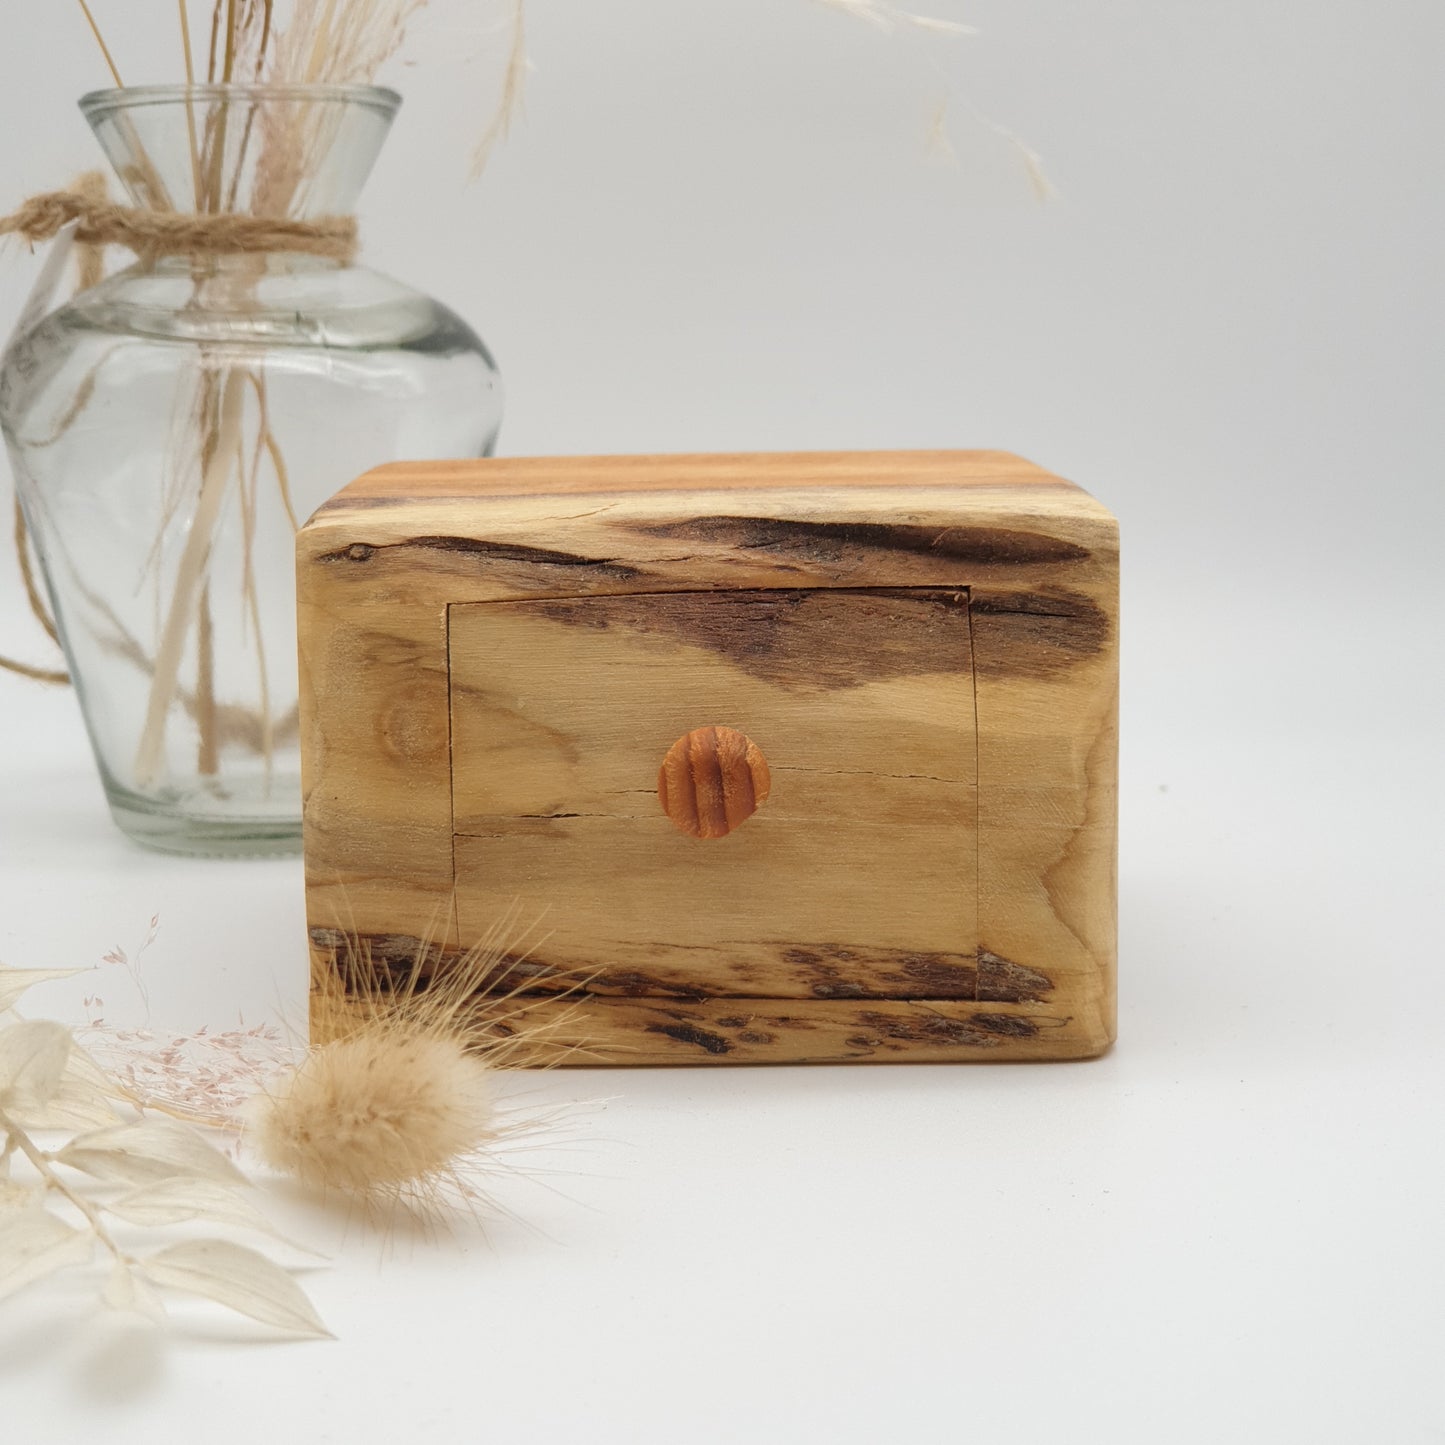 Natural edge wooden box - Yew